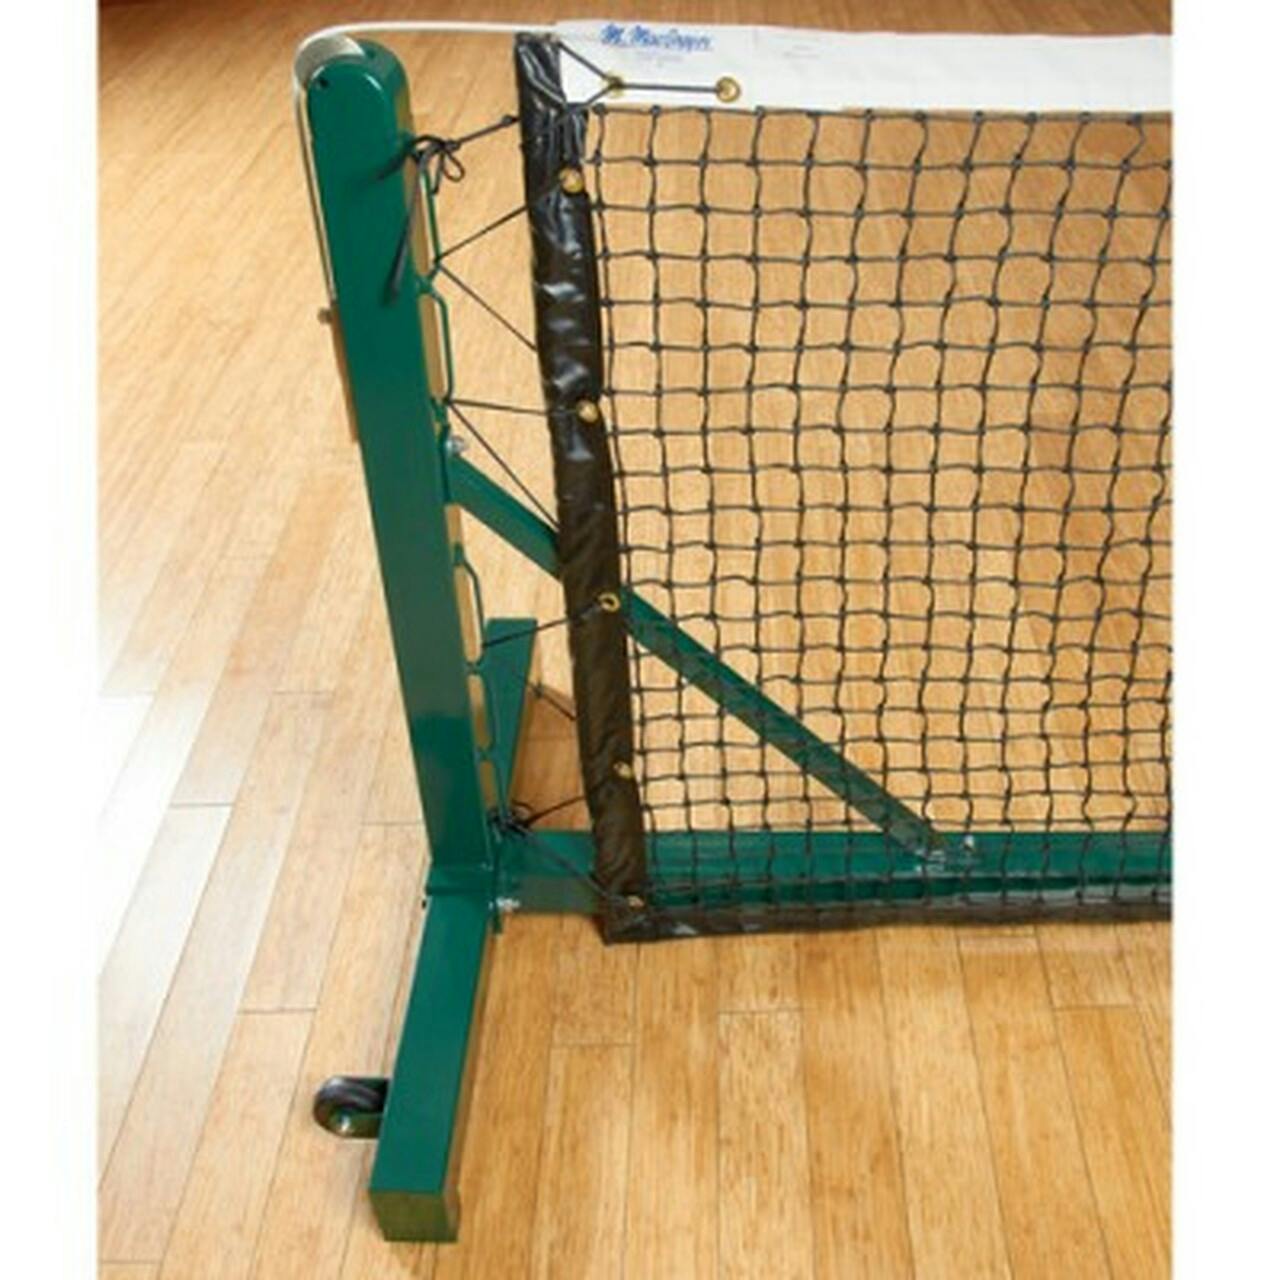 Portable Tennis Net.jpg